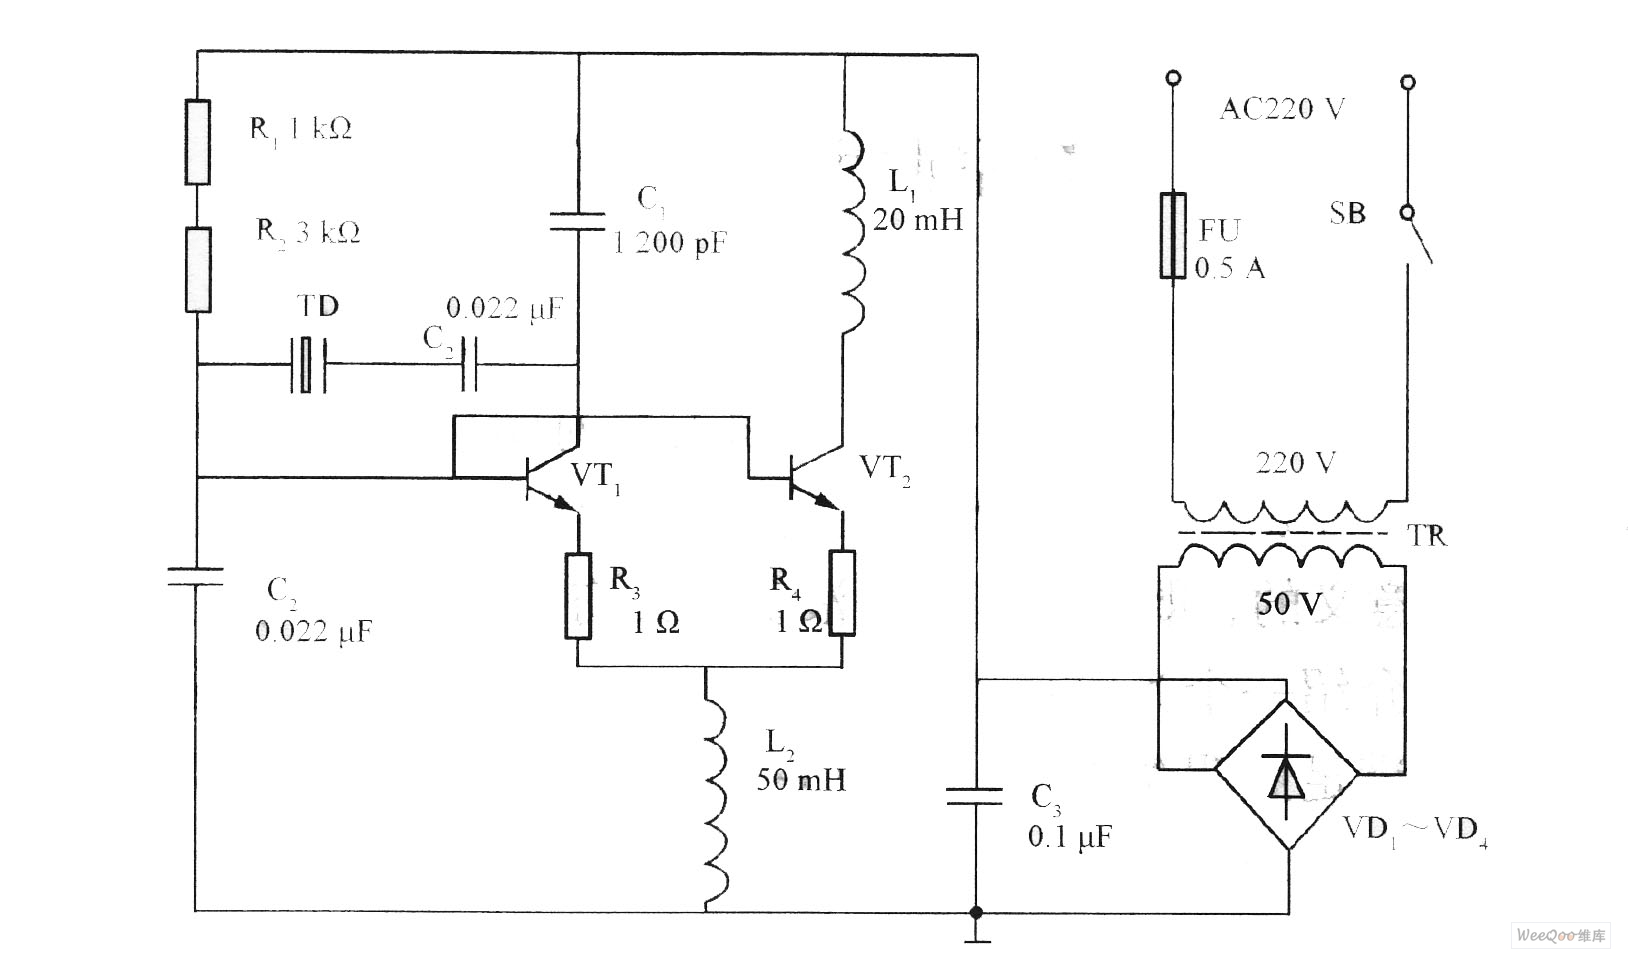 Bathtub energy-saving oxygenator circuit schematic